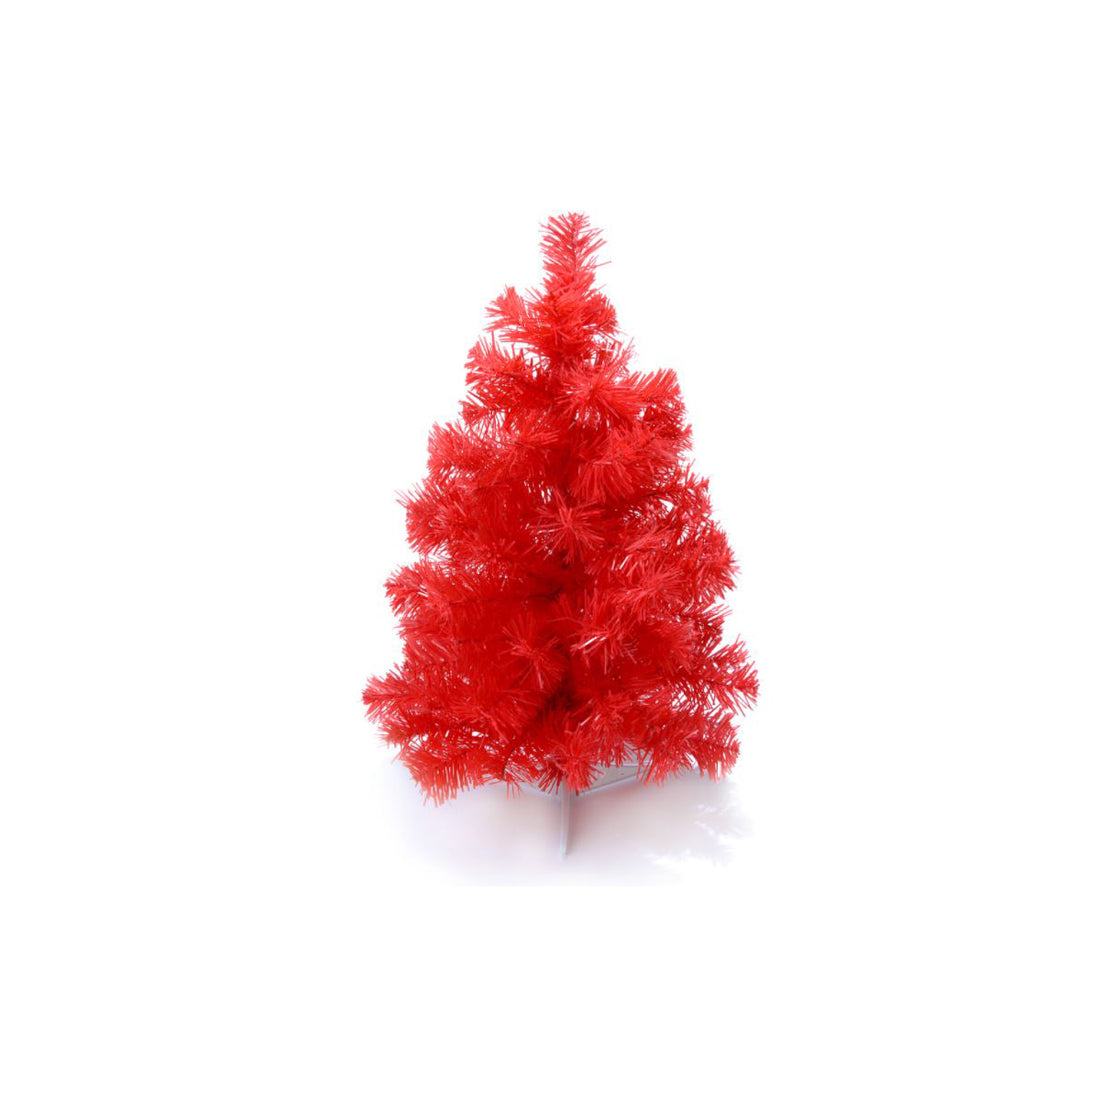 Mini Christmas Tree - Green, Red or White